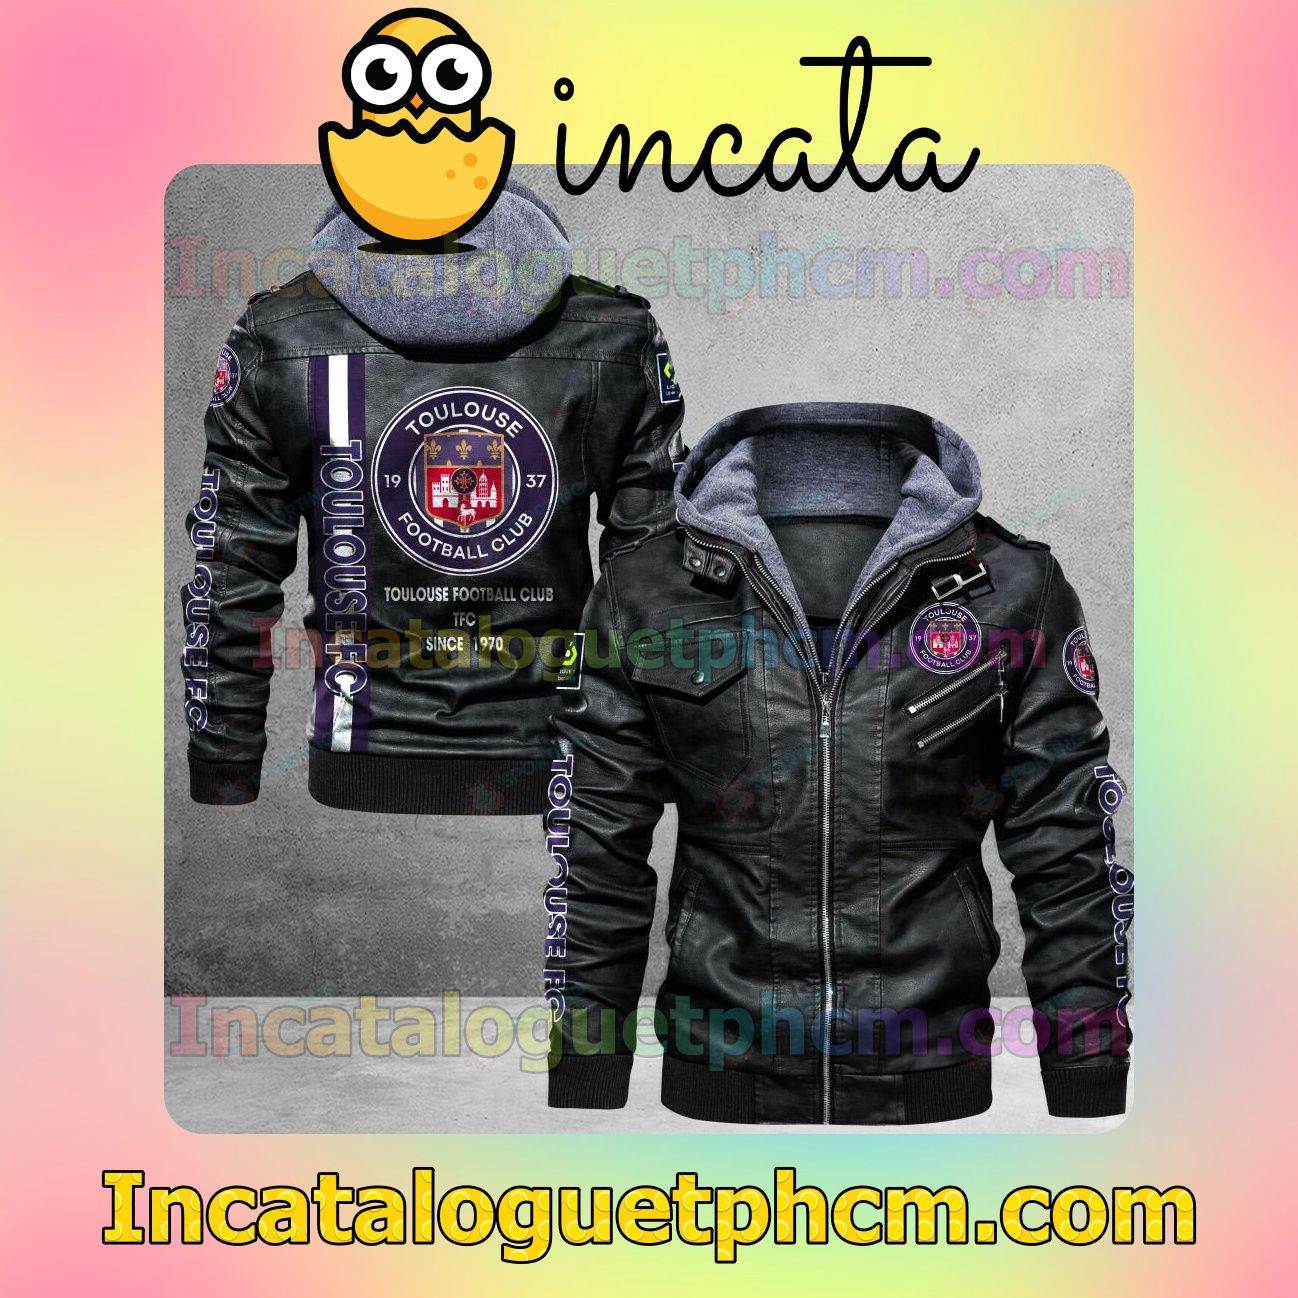 Toulouse Football Club Brand Uniform Leather Jacket